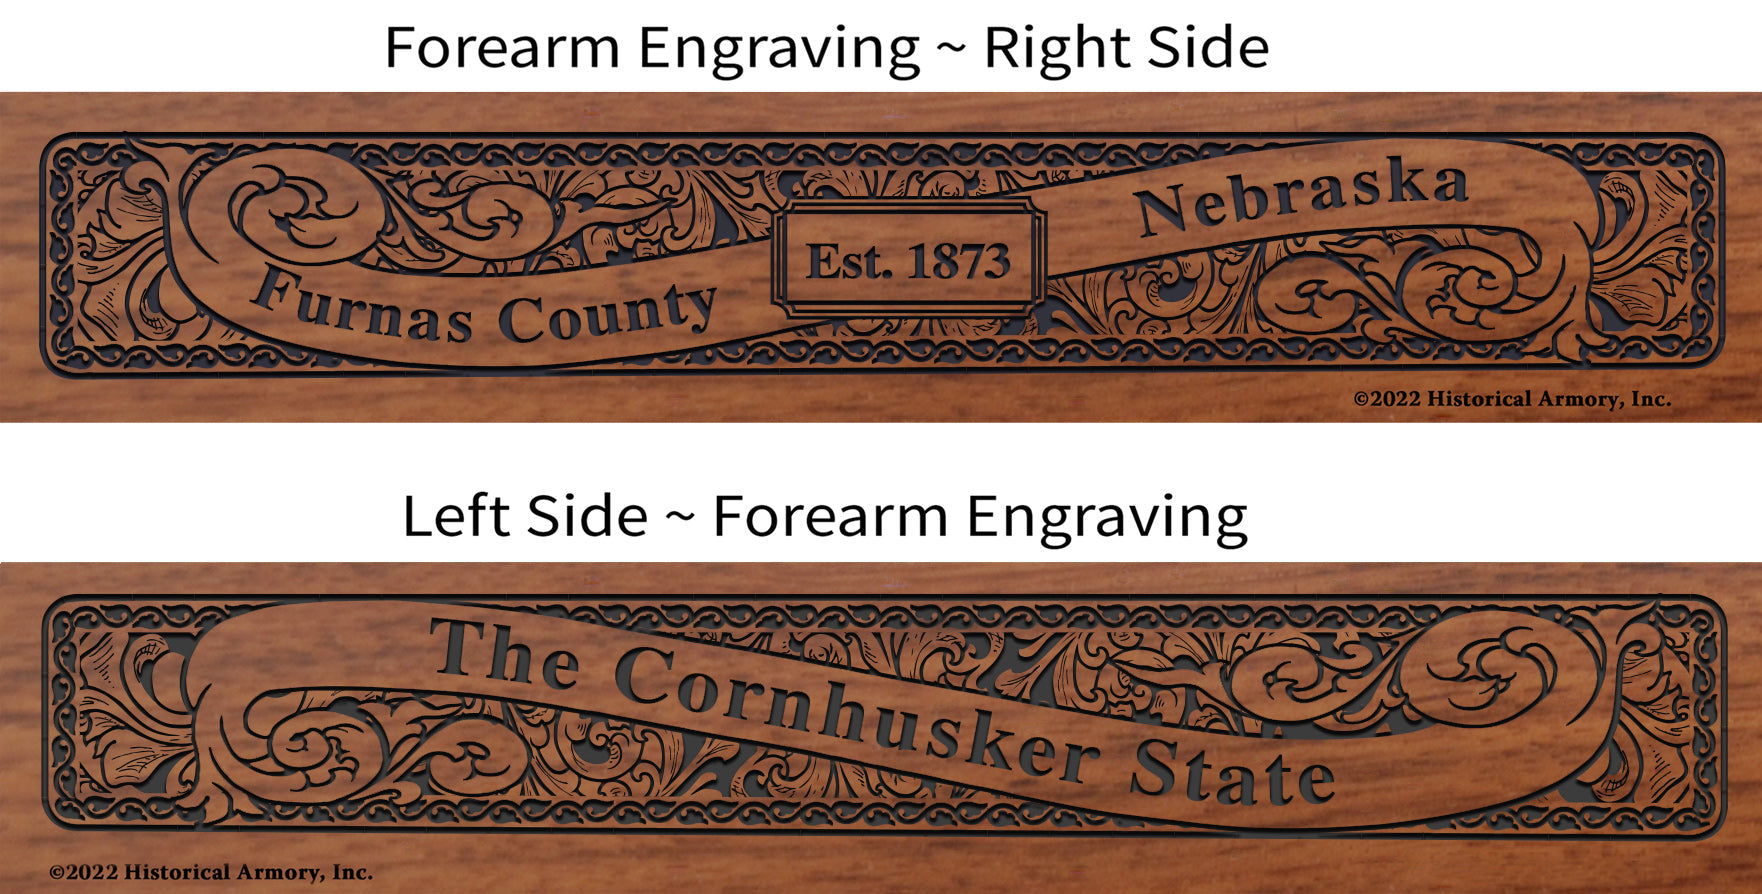 Furnas County Nebraska Engraved Rifle Forearm